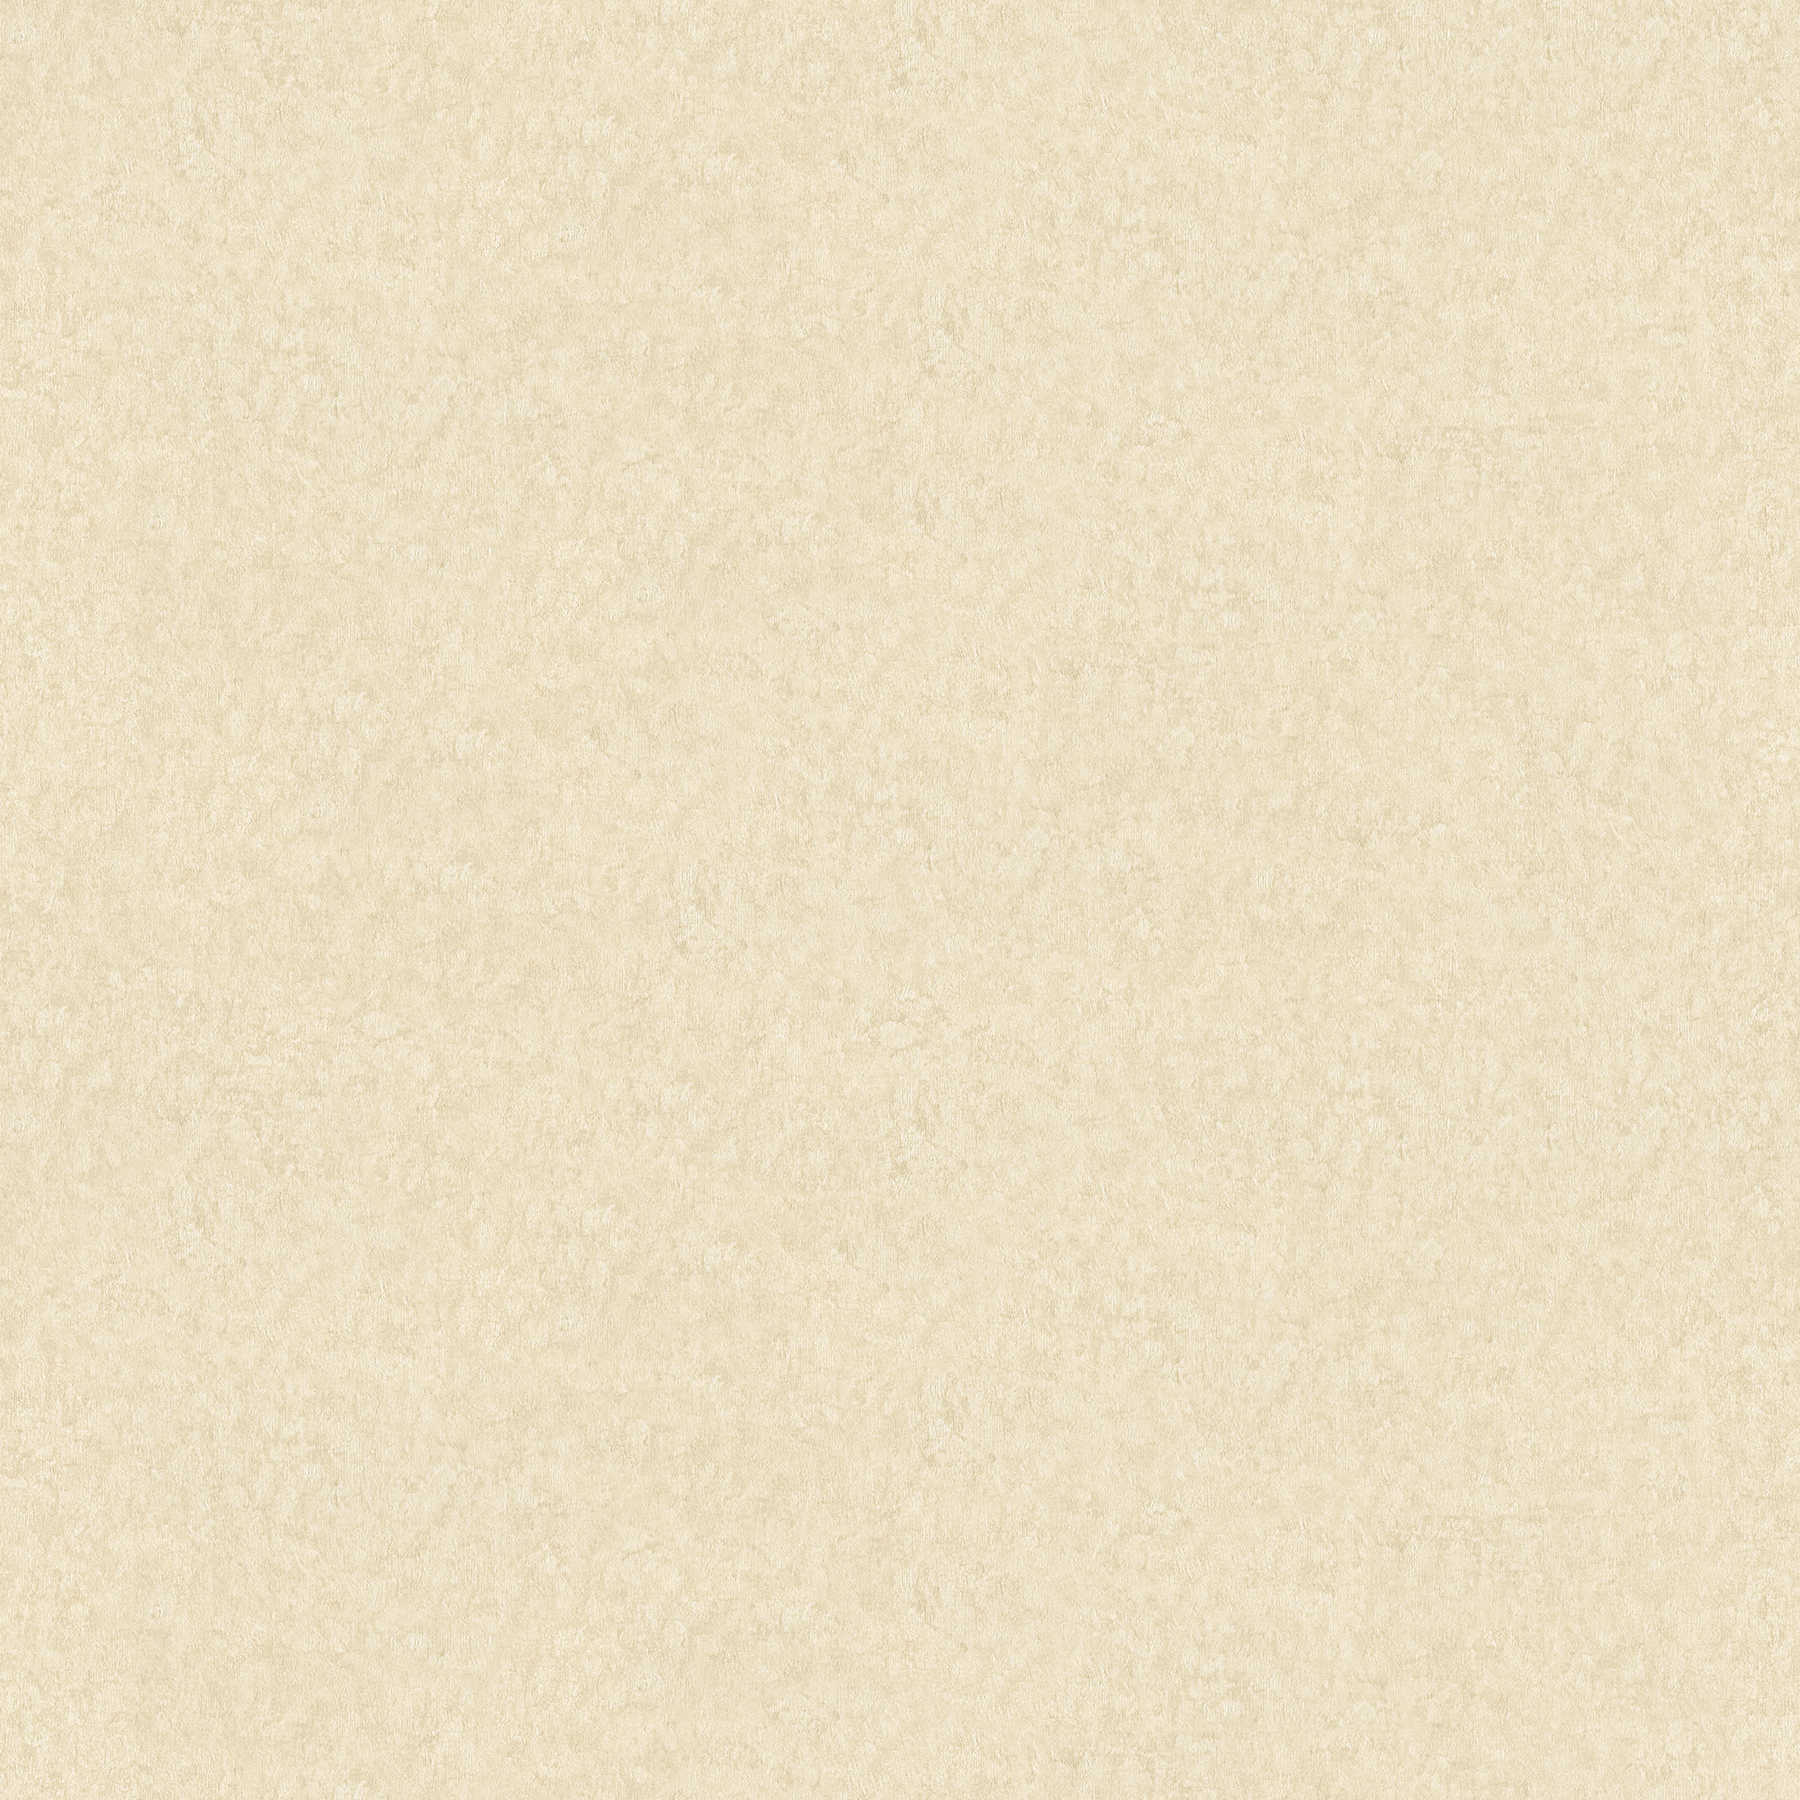             Plain premium wallpaper matt - beige
        